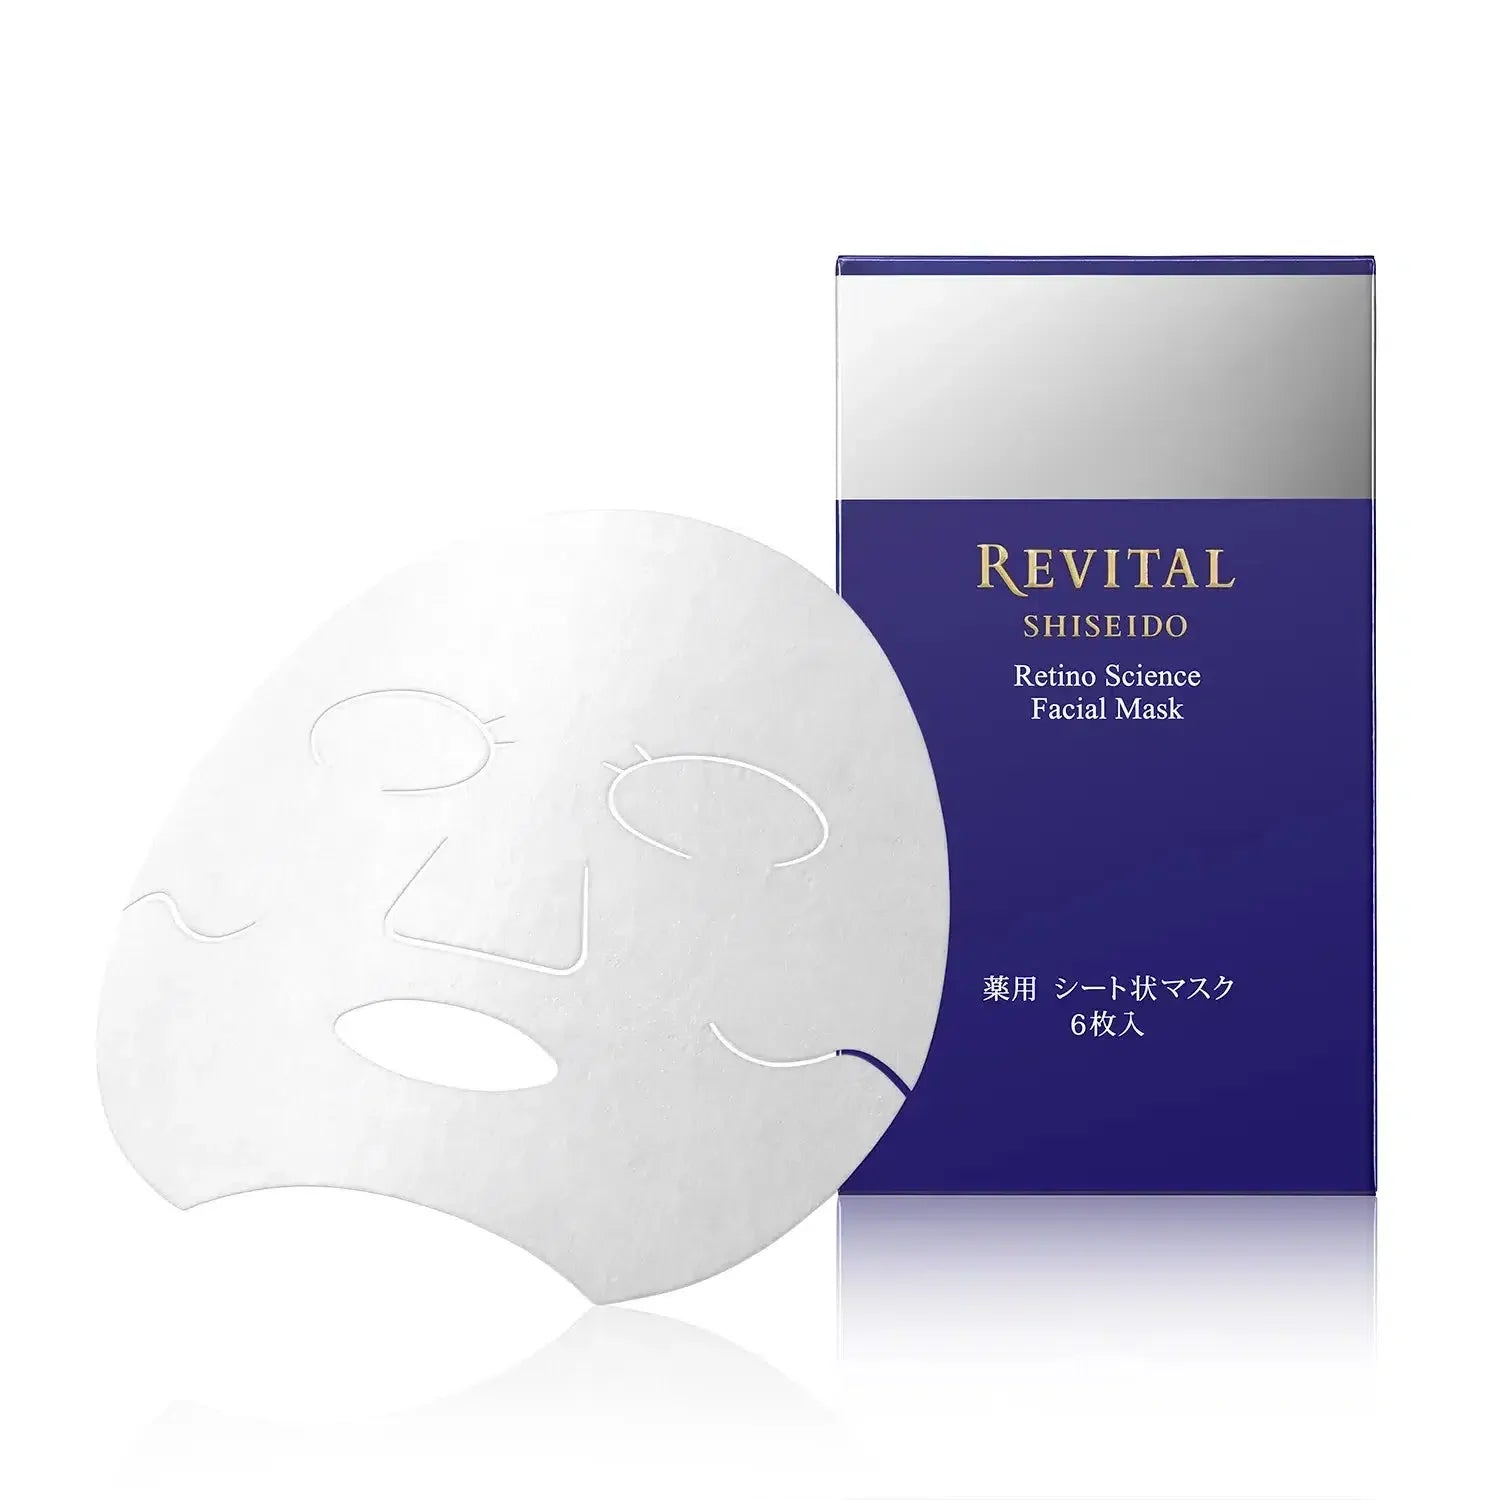 Shiseido Revital Wrinklelift Retino Science Face Mask 6 Sheets